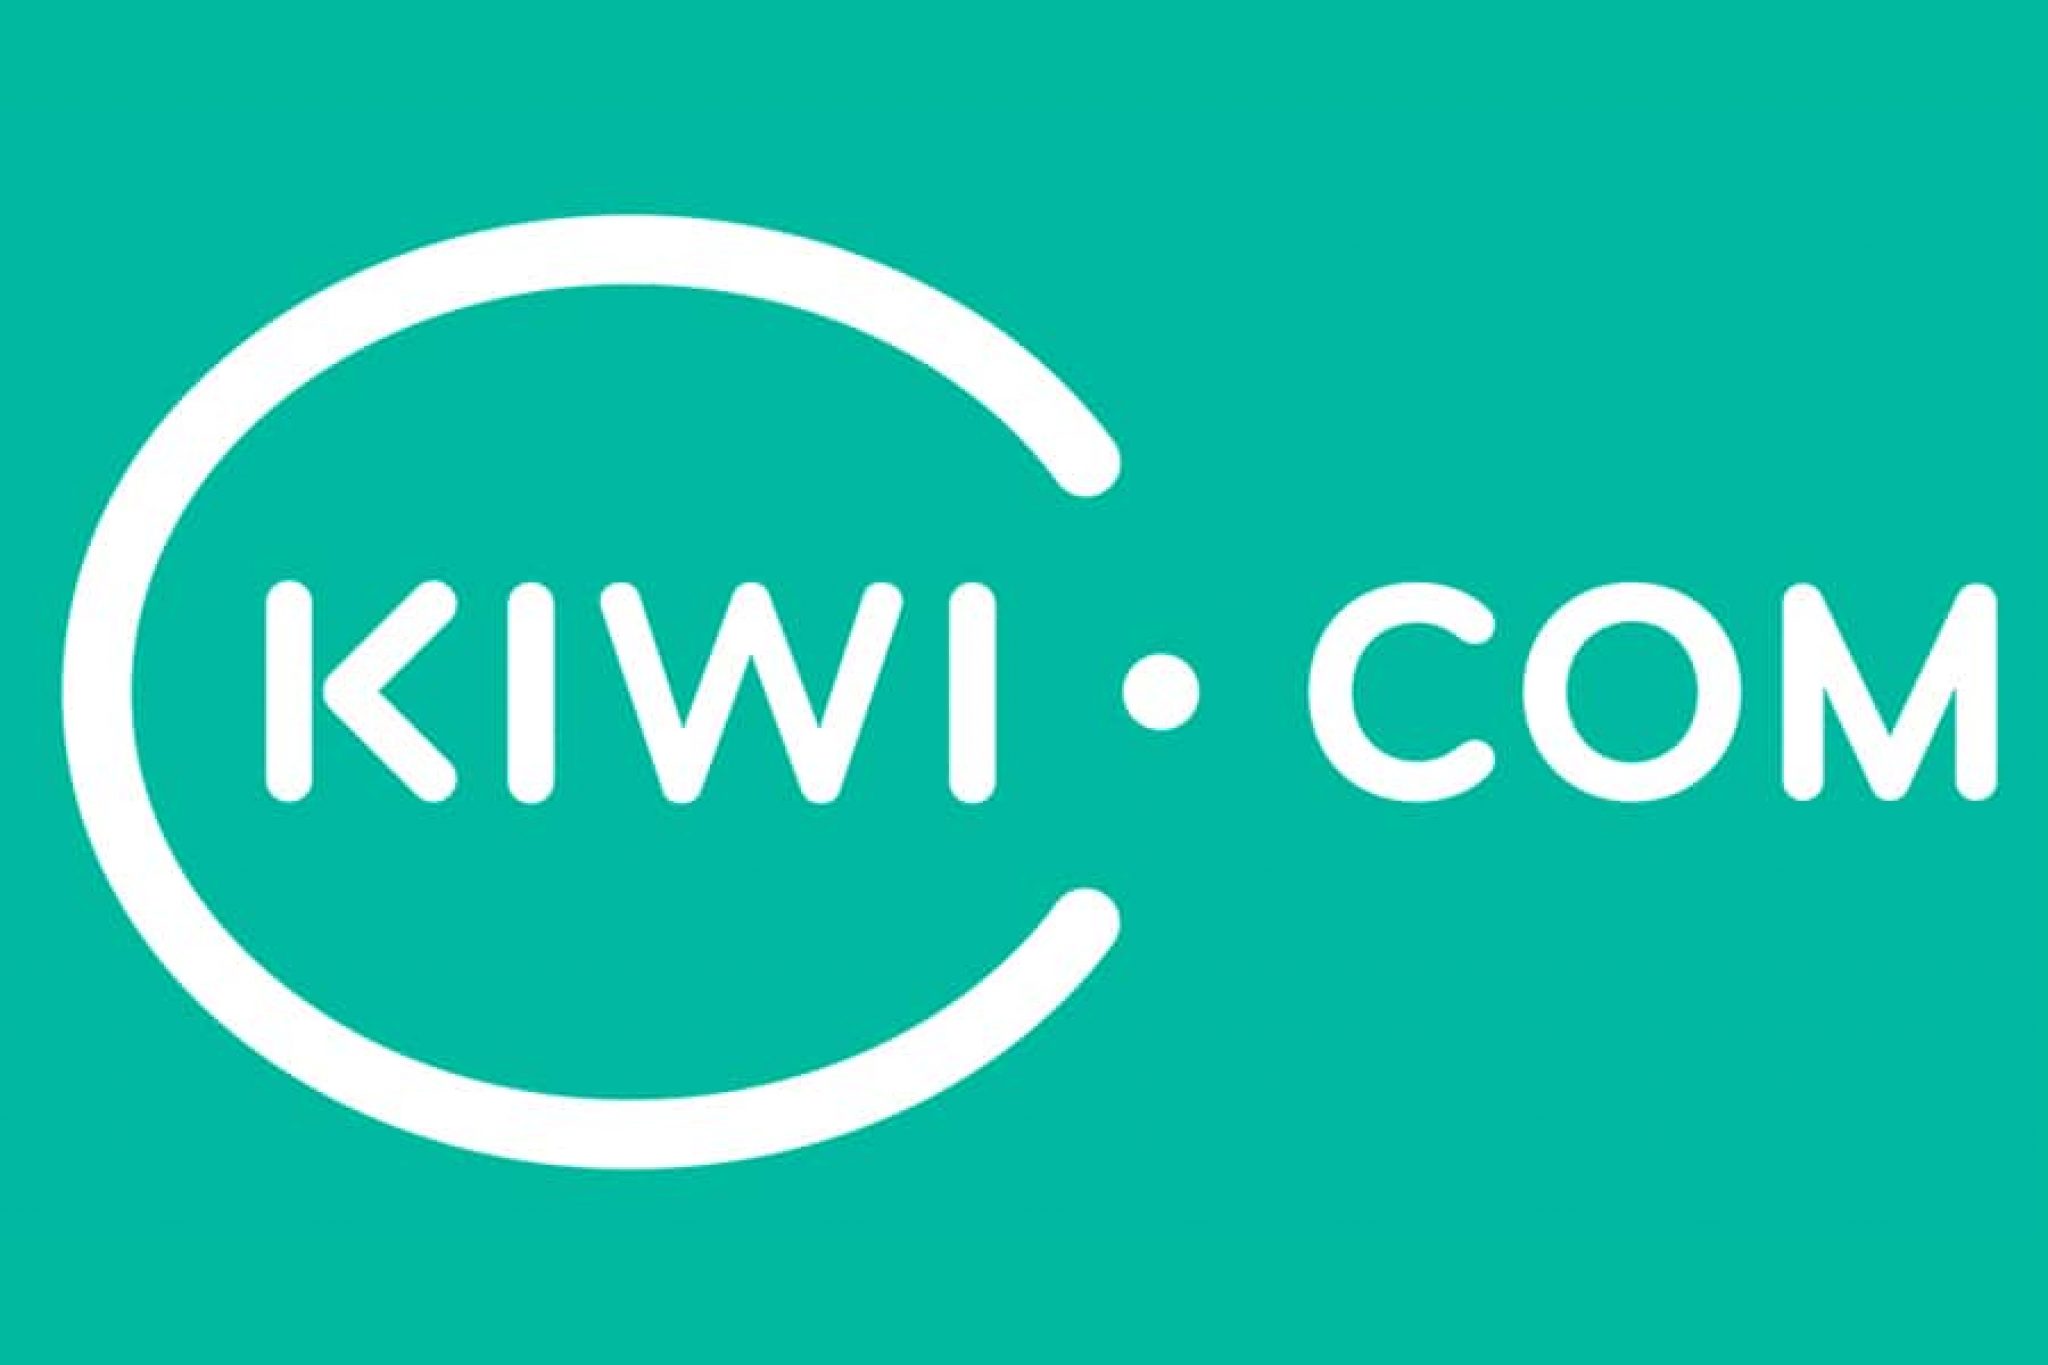 Kiwi. com opiniones